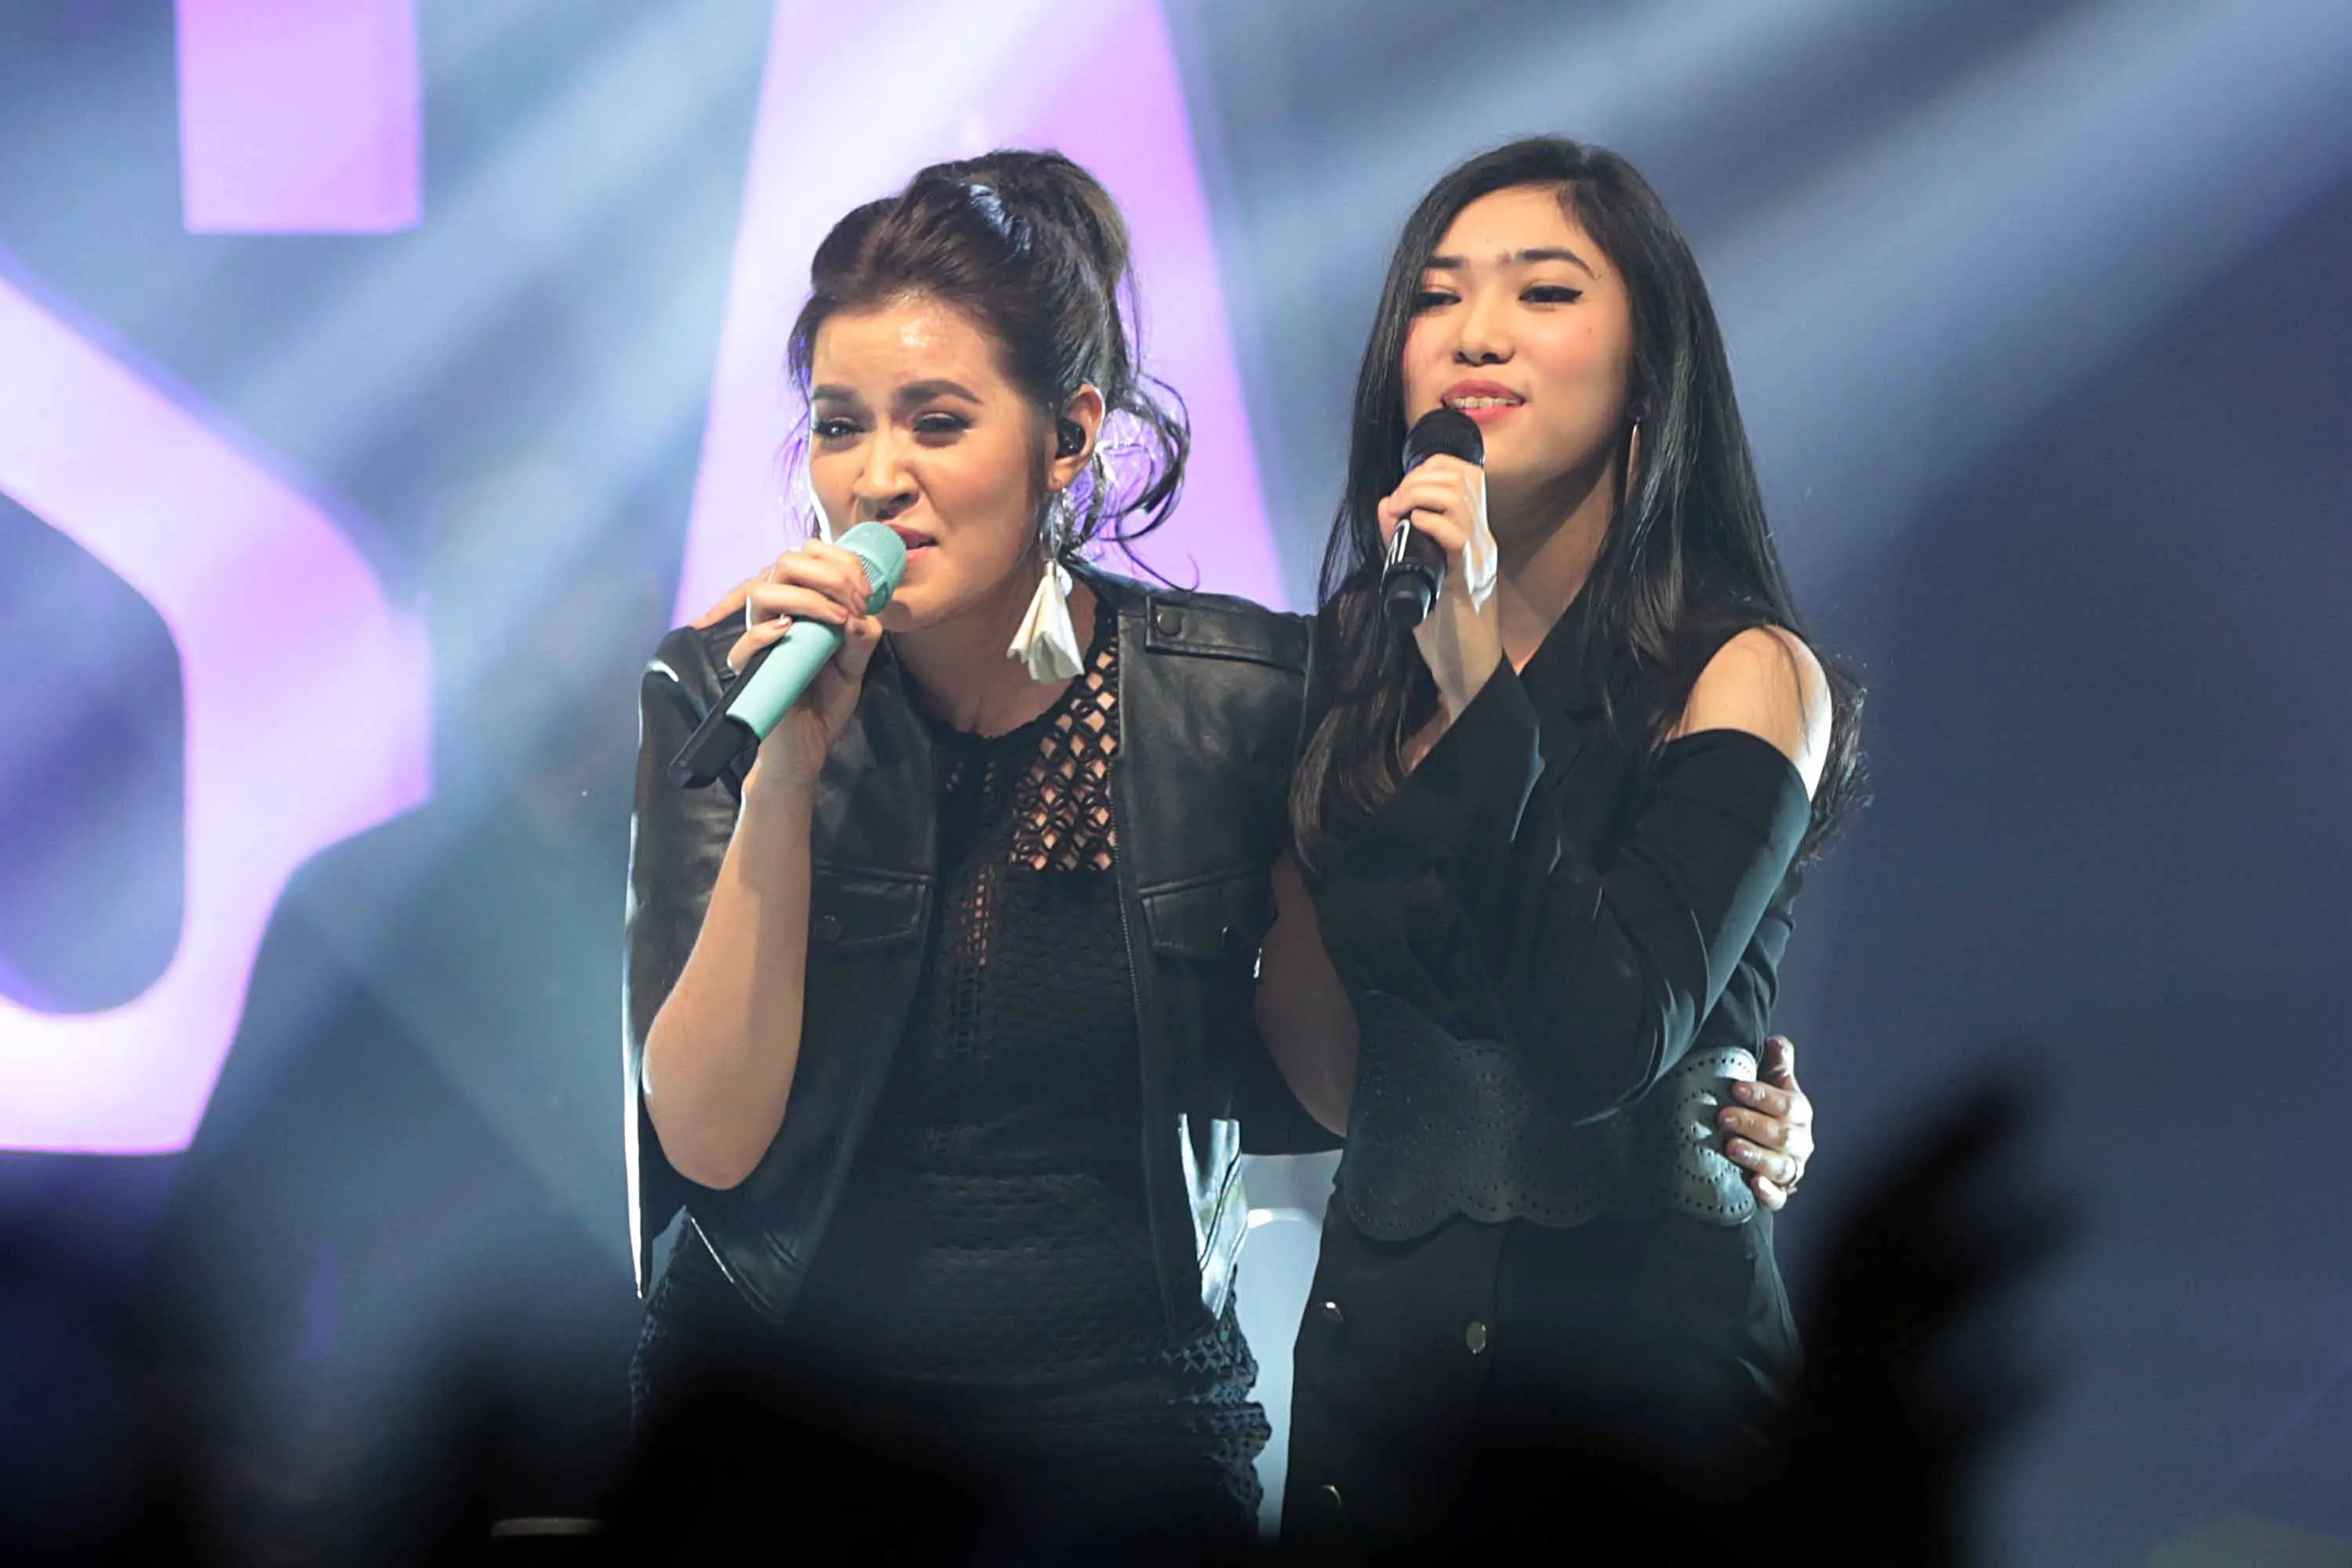 Dua penyanyi solo wanita Raisa dan Isyana Sarasvati berduet dalam meluncurkan single. Rabu (5/4) malam, keduanya menggelar showcase demi menghibur para penggemar keduanya, YouRaisa dan Isyanation. (Deki Prayoga/Bintang.com)